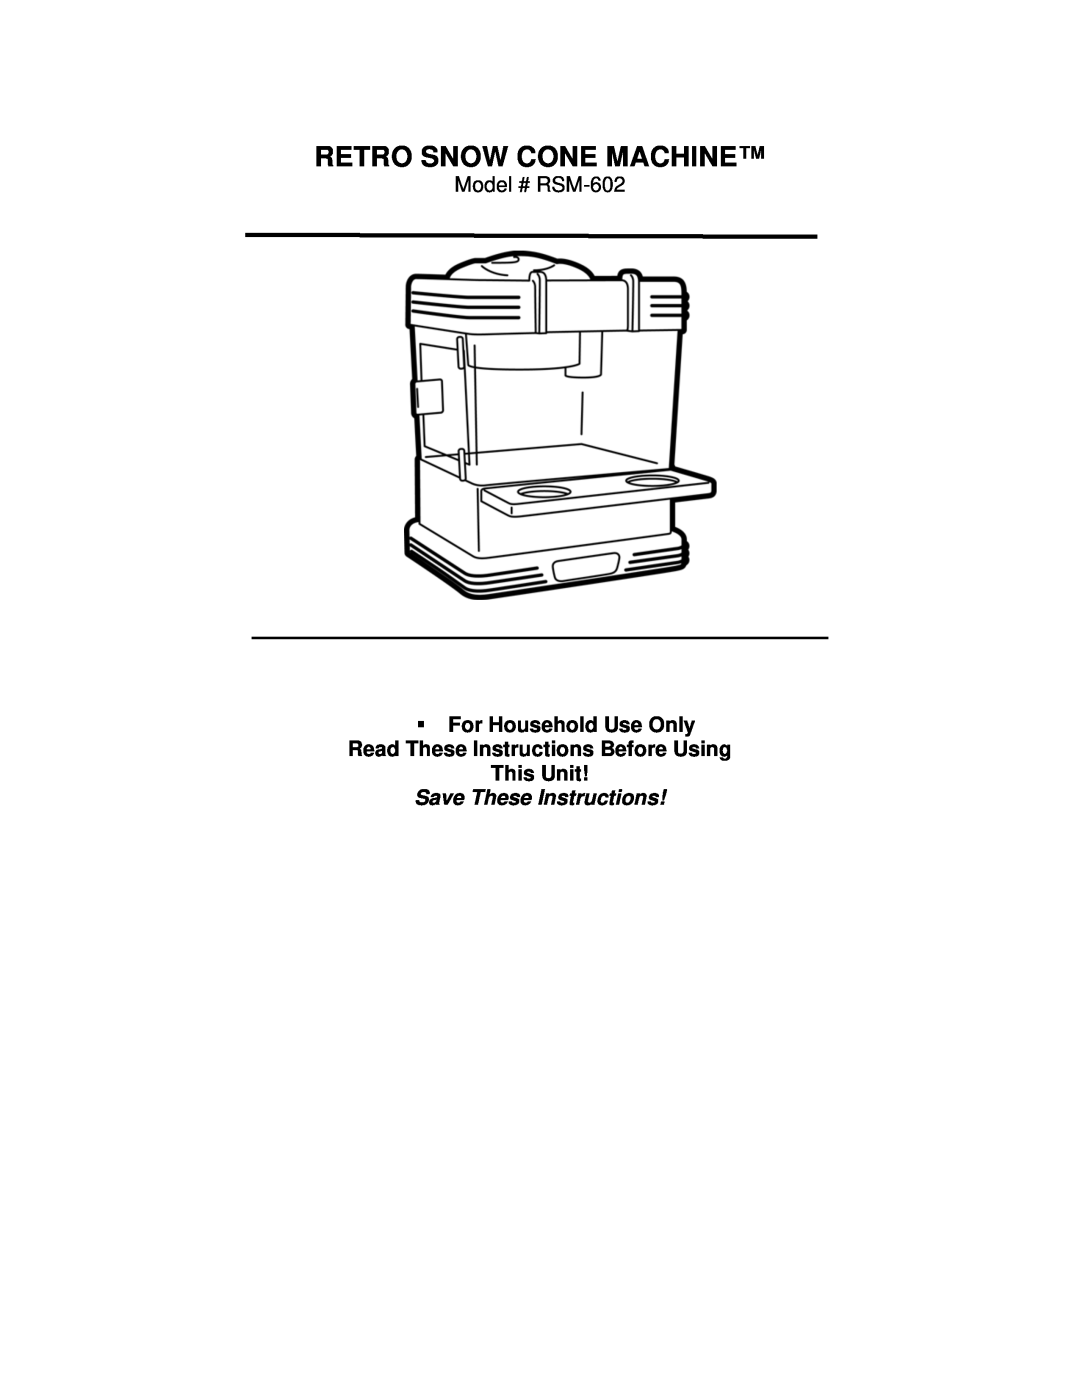 Nostalgia Electrics manual Retro Snow Cone Machine, This Unit, Save These Instructions, Model # RSM-602 